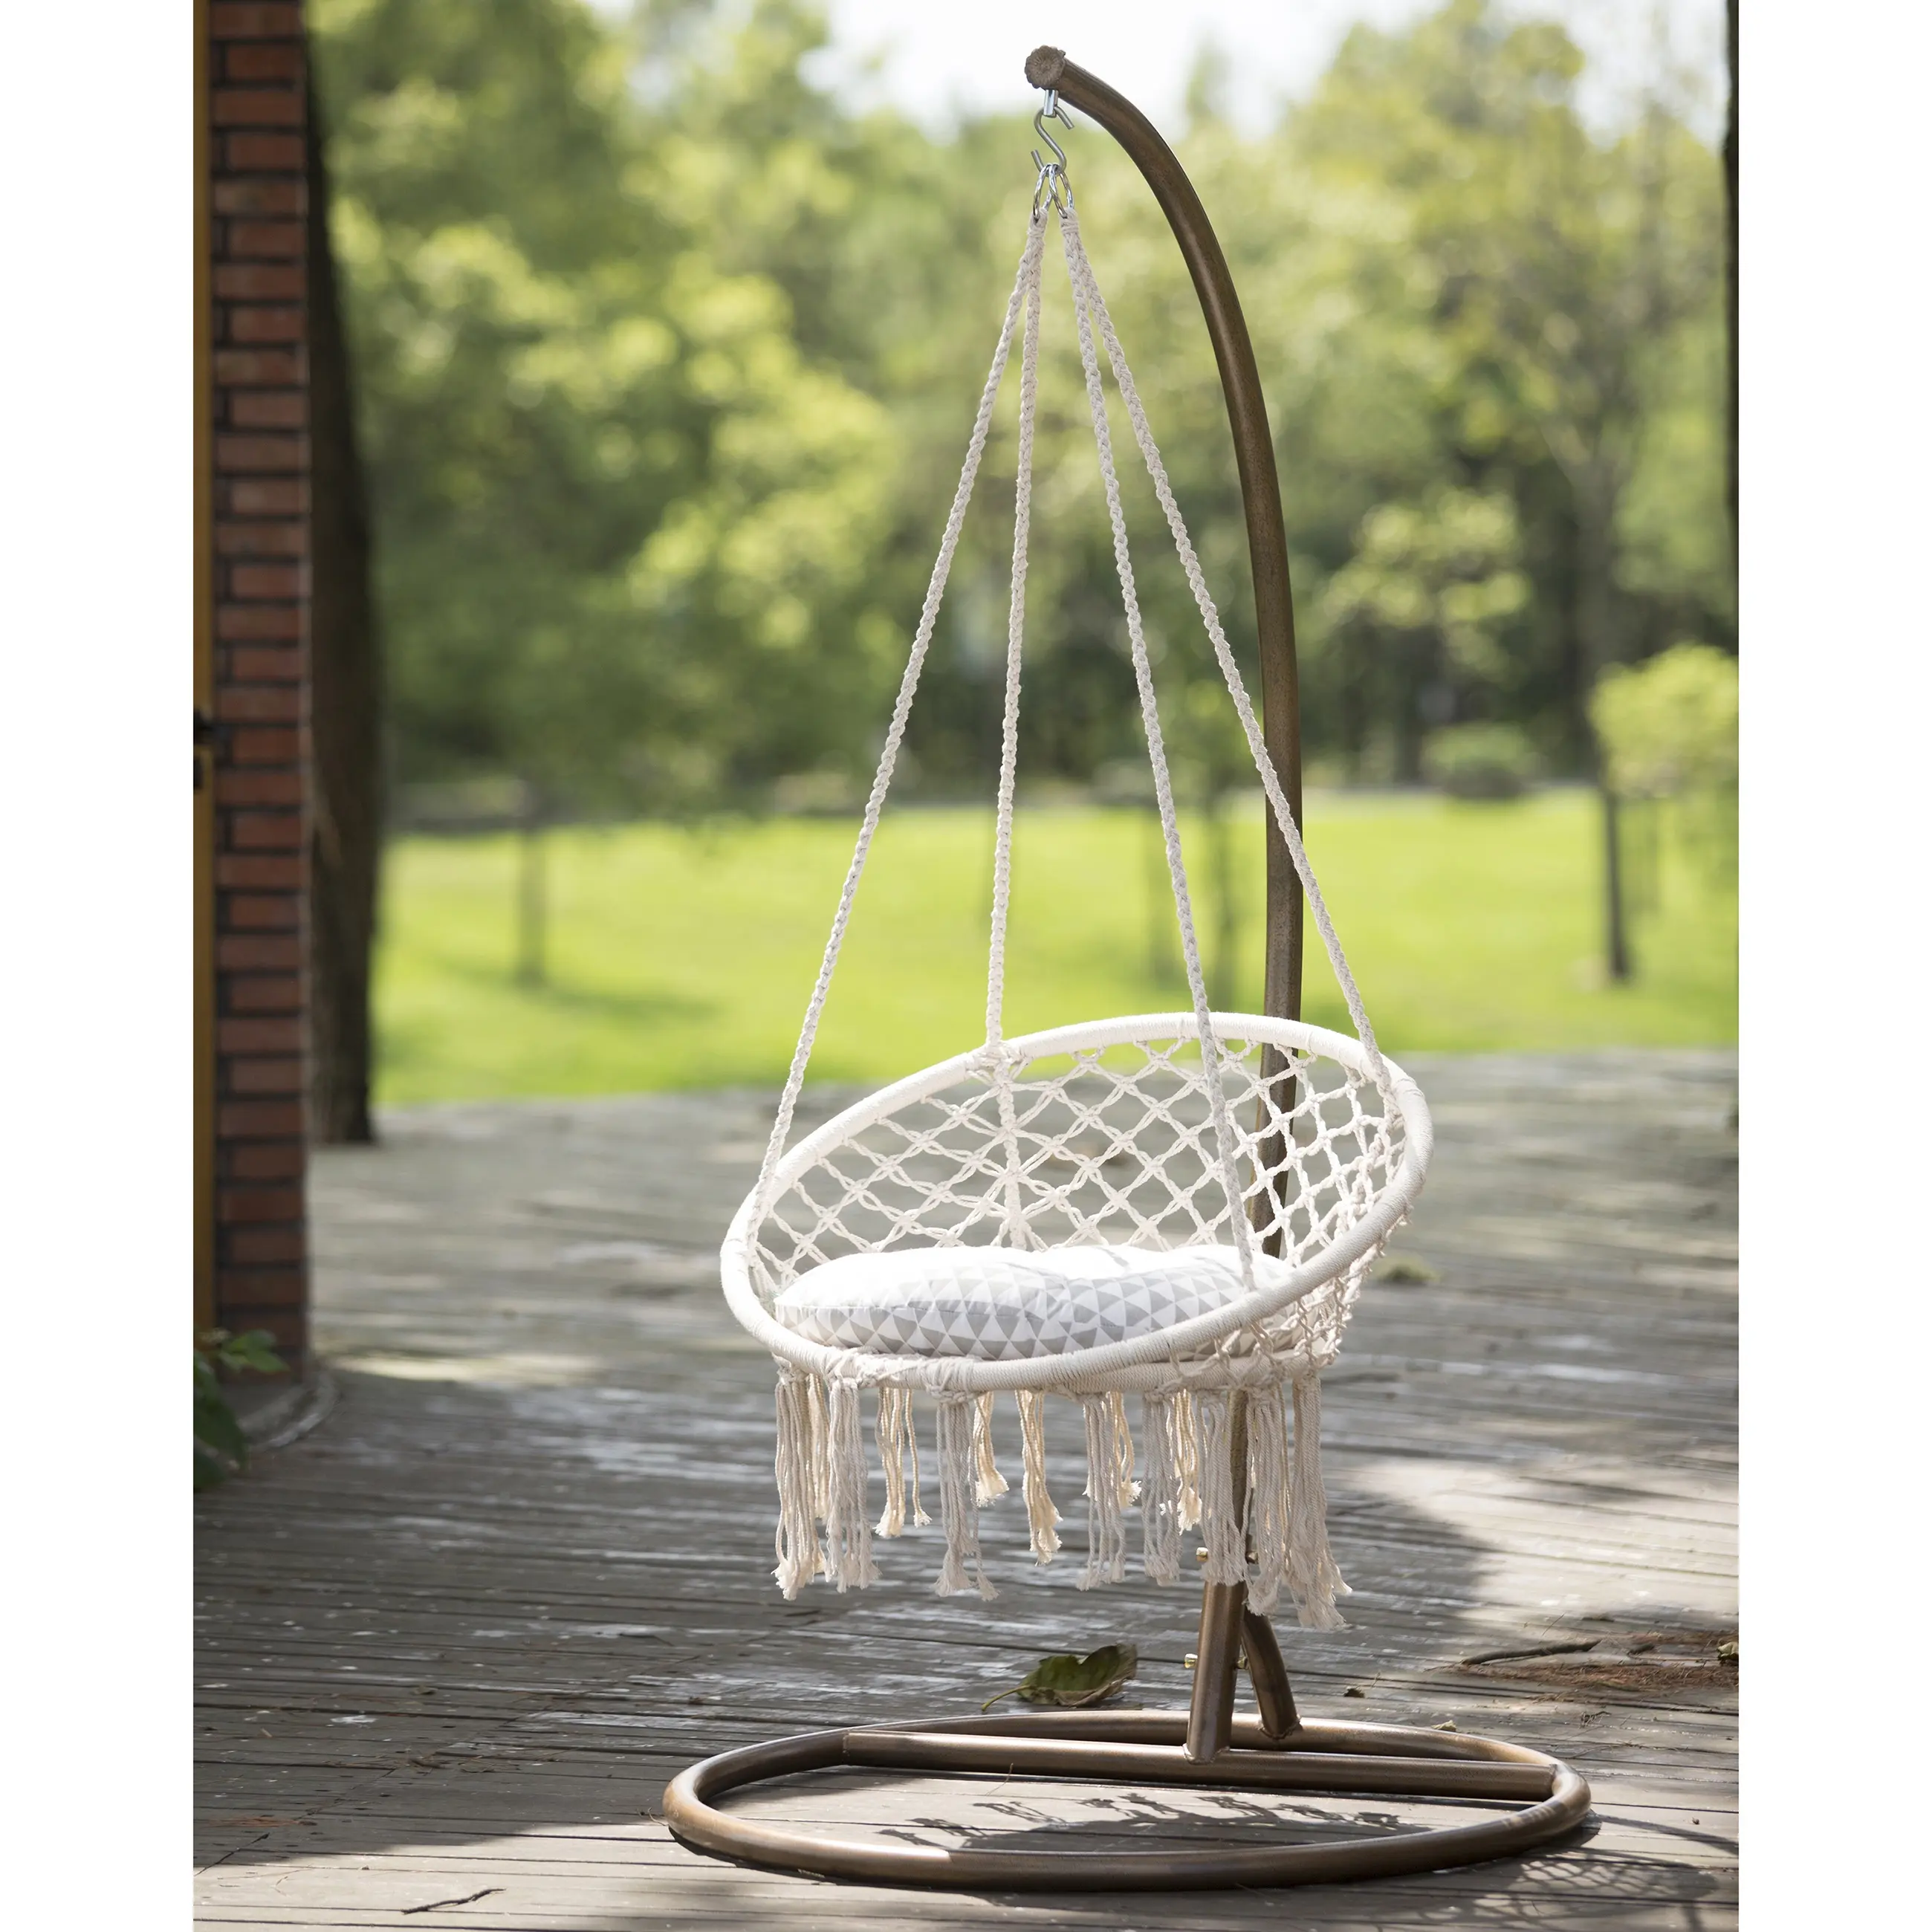 Huarun outdoor garden swing bed hanging chair, handmade rope hanging swing chair, outdoor round swing